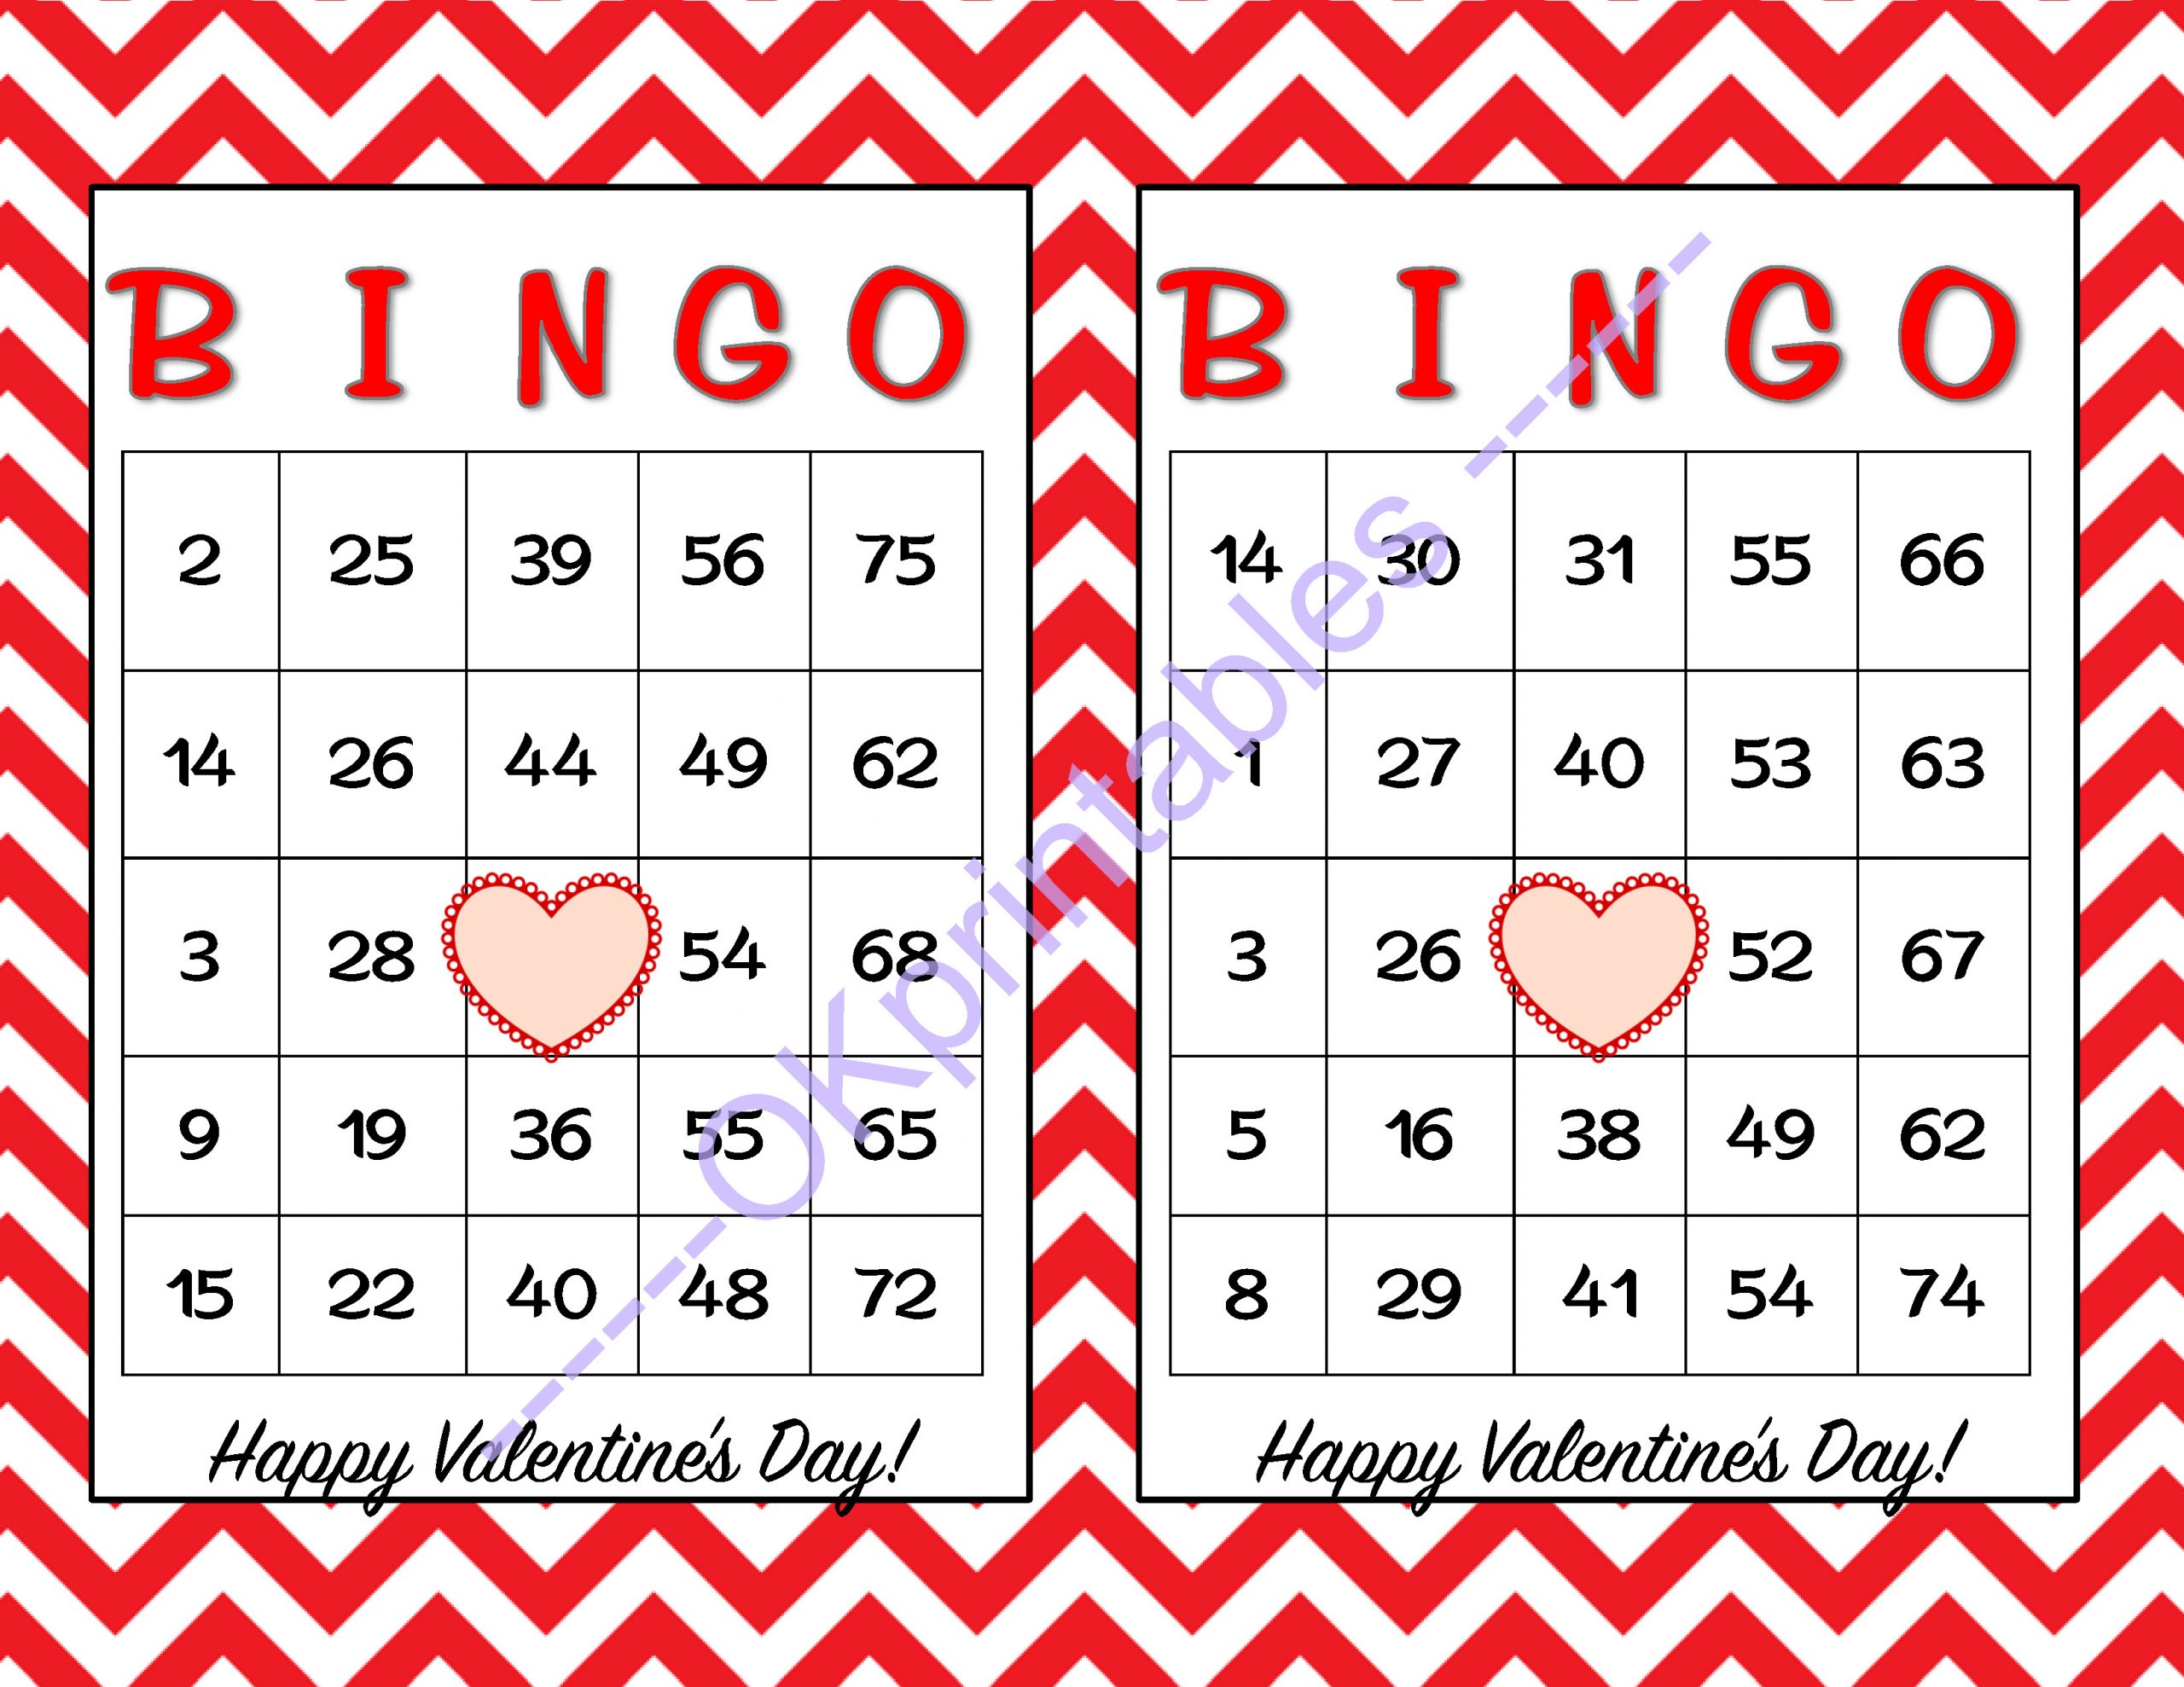 60 Happy Valentines Day Bingo Cards By Okprintables On 